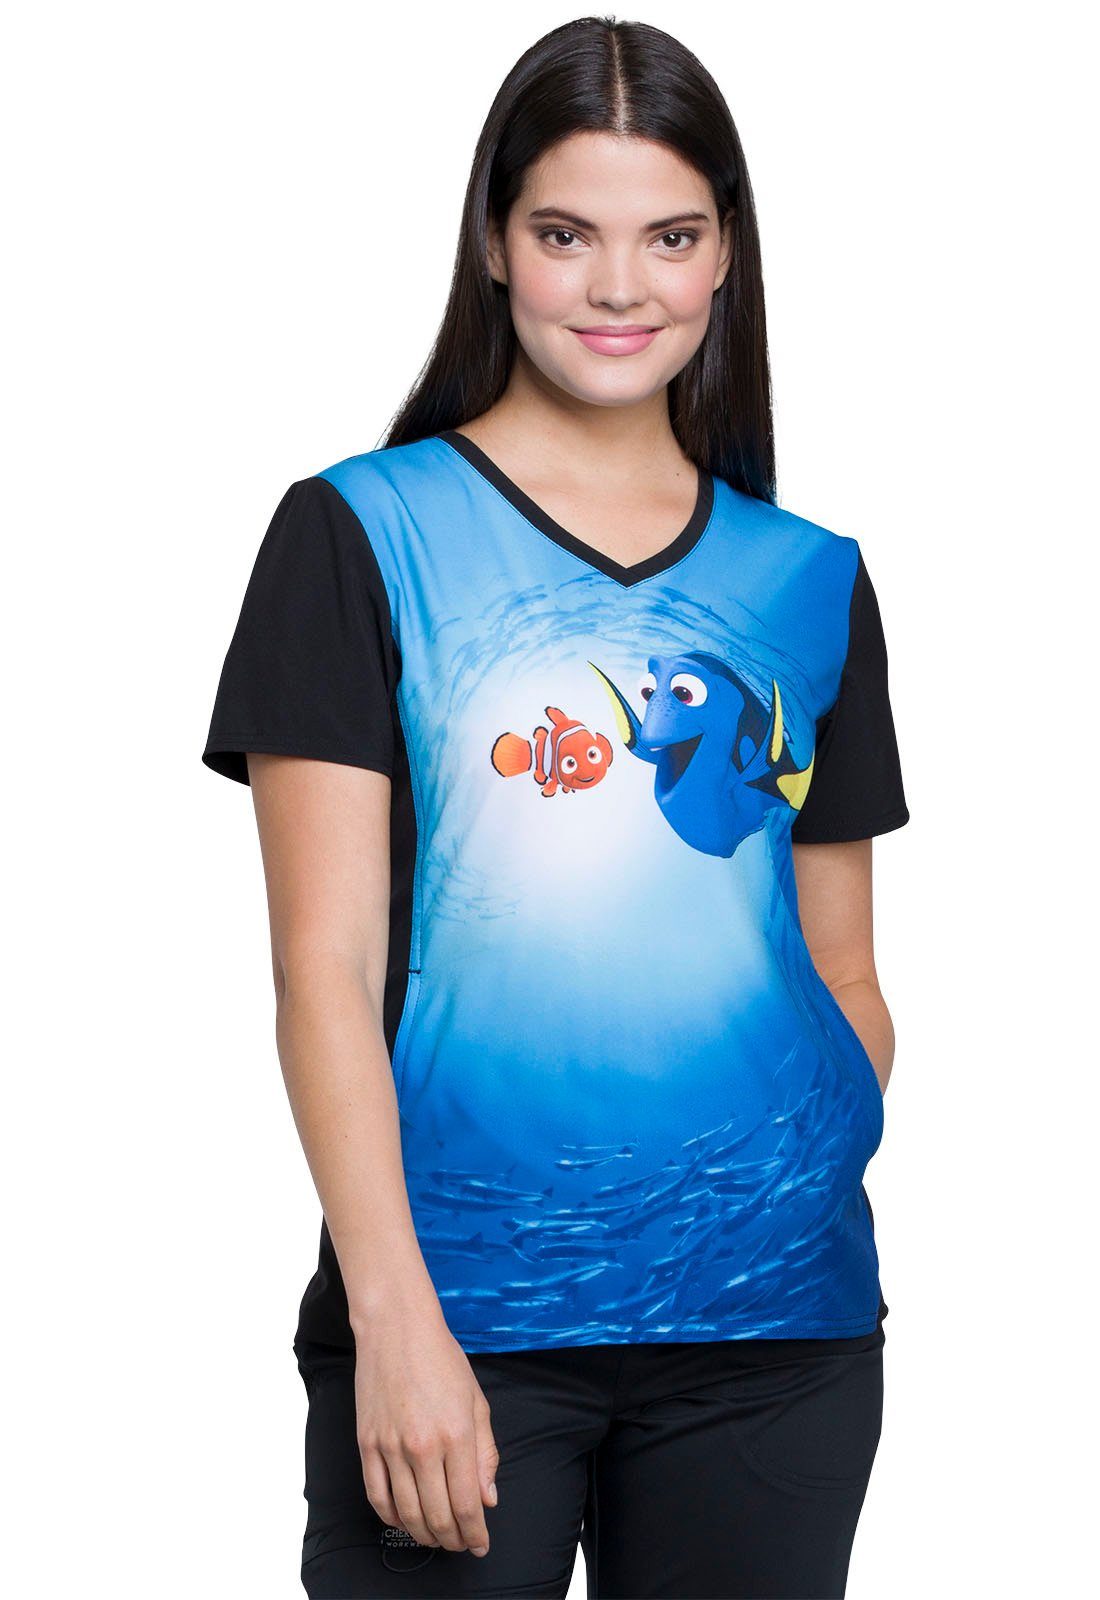 Funktionsbluse Nemo" bedruckter mit Motiv & Damen Bunt Kasack "Dory Disney Cherokee Kasack